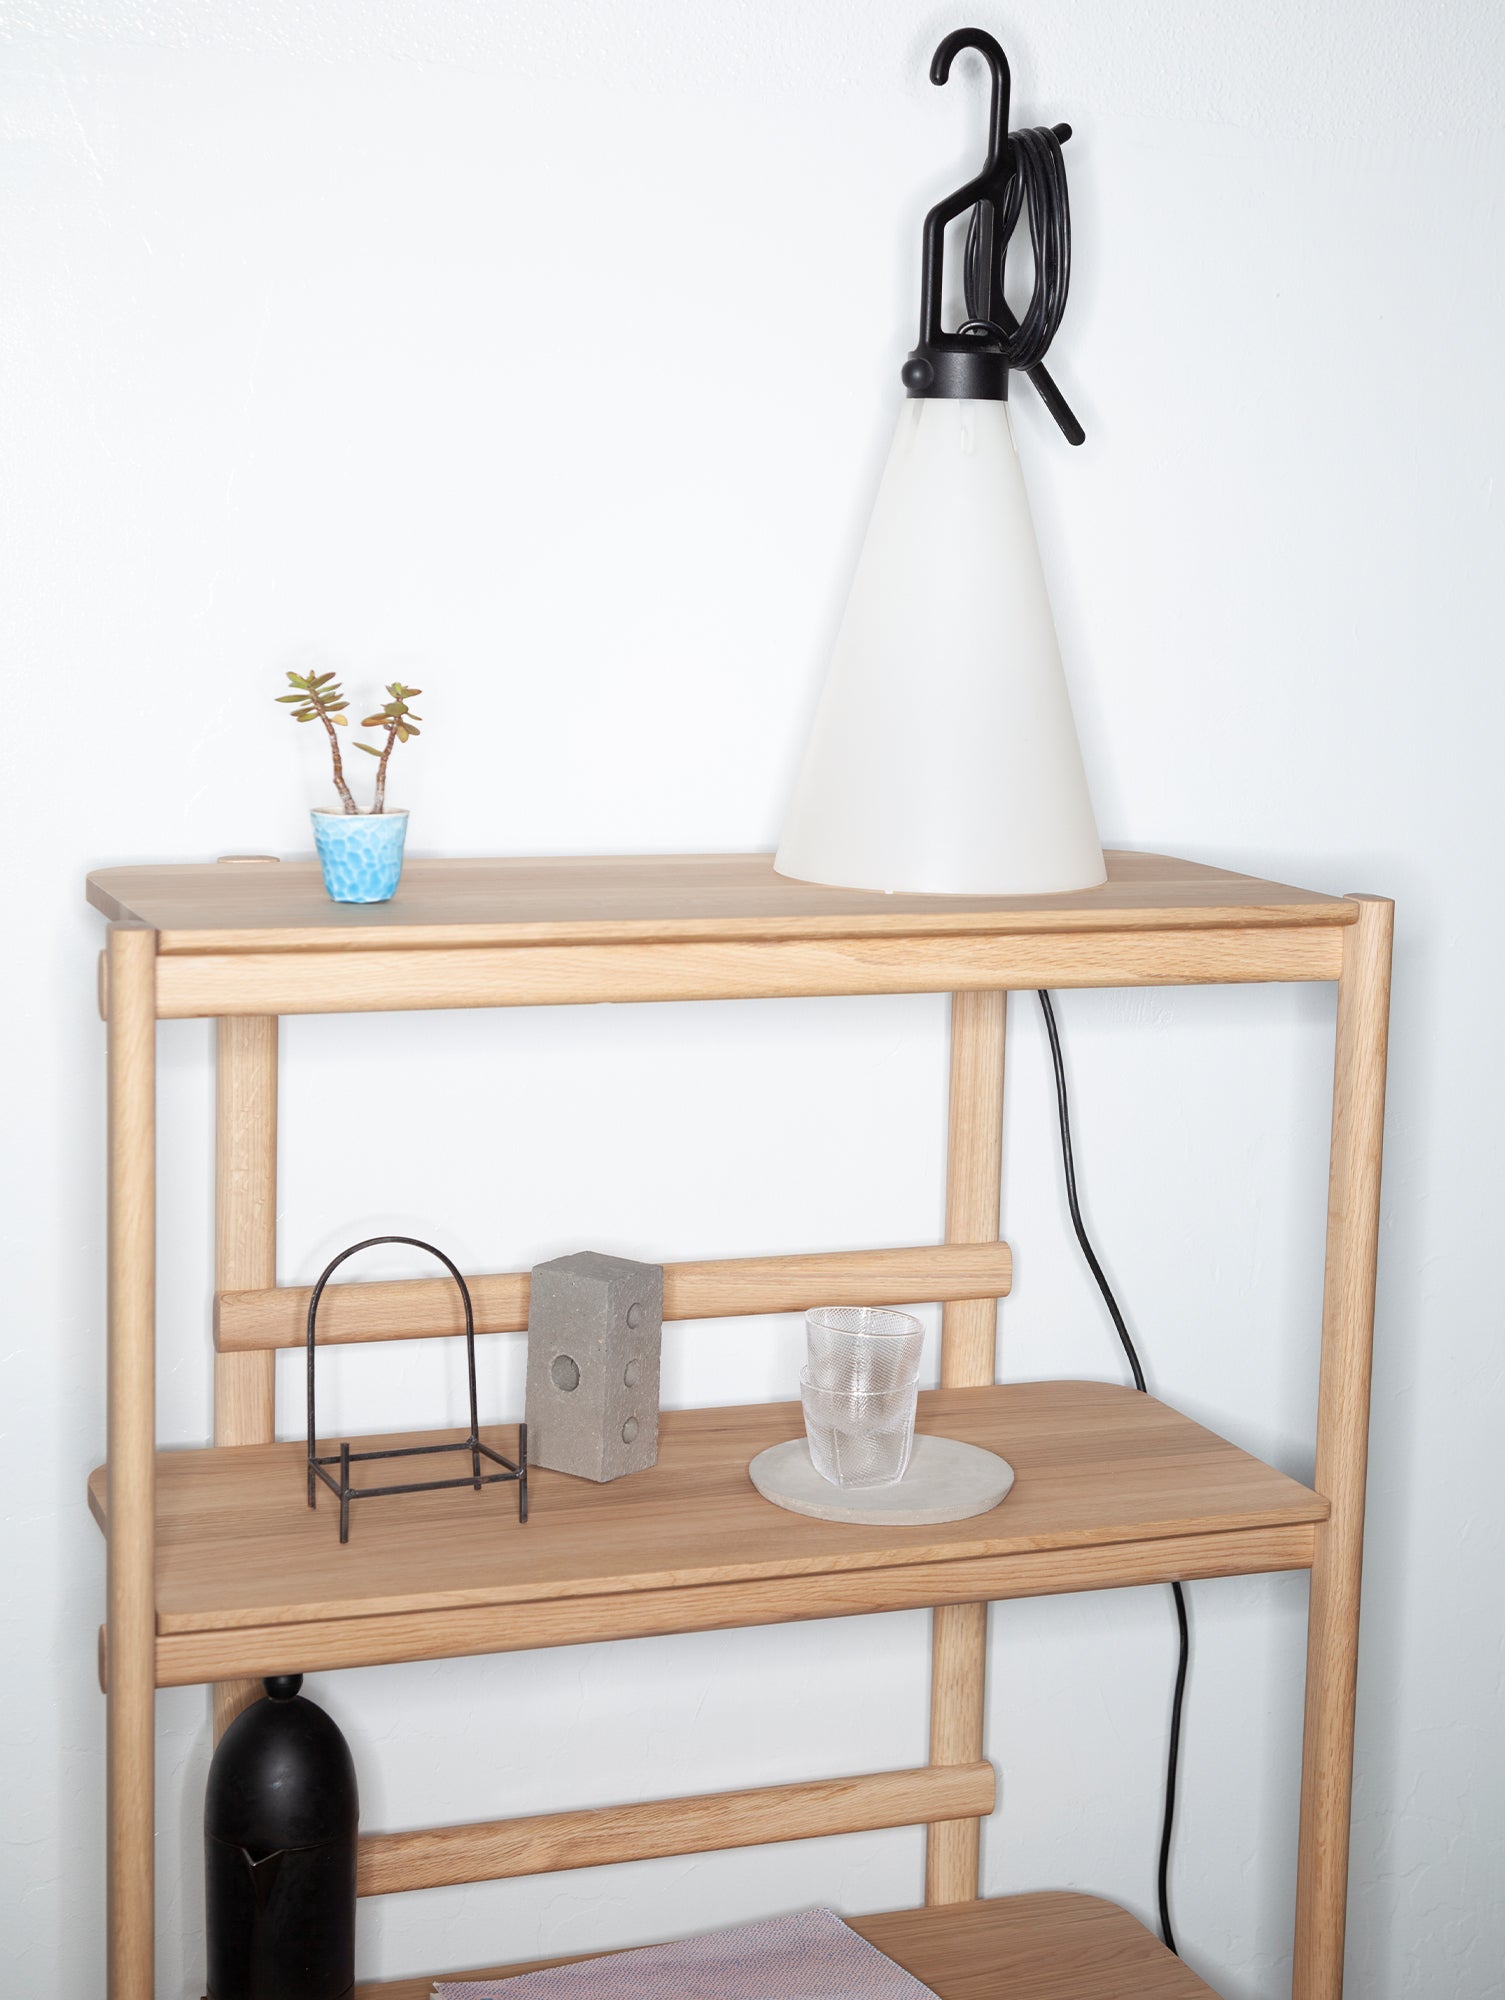 Archive Shelf by Karimoku New Standard - W80 cm / Oak